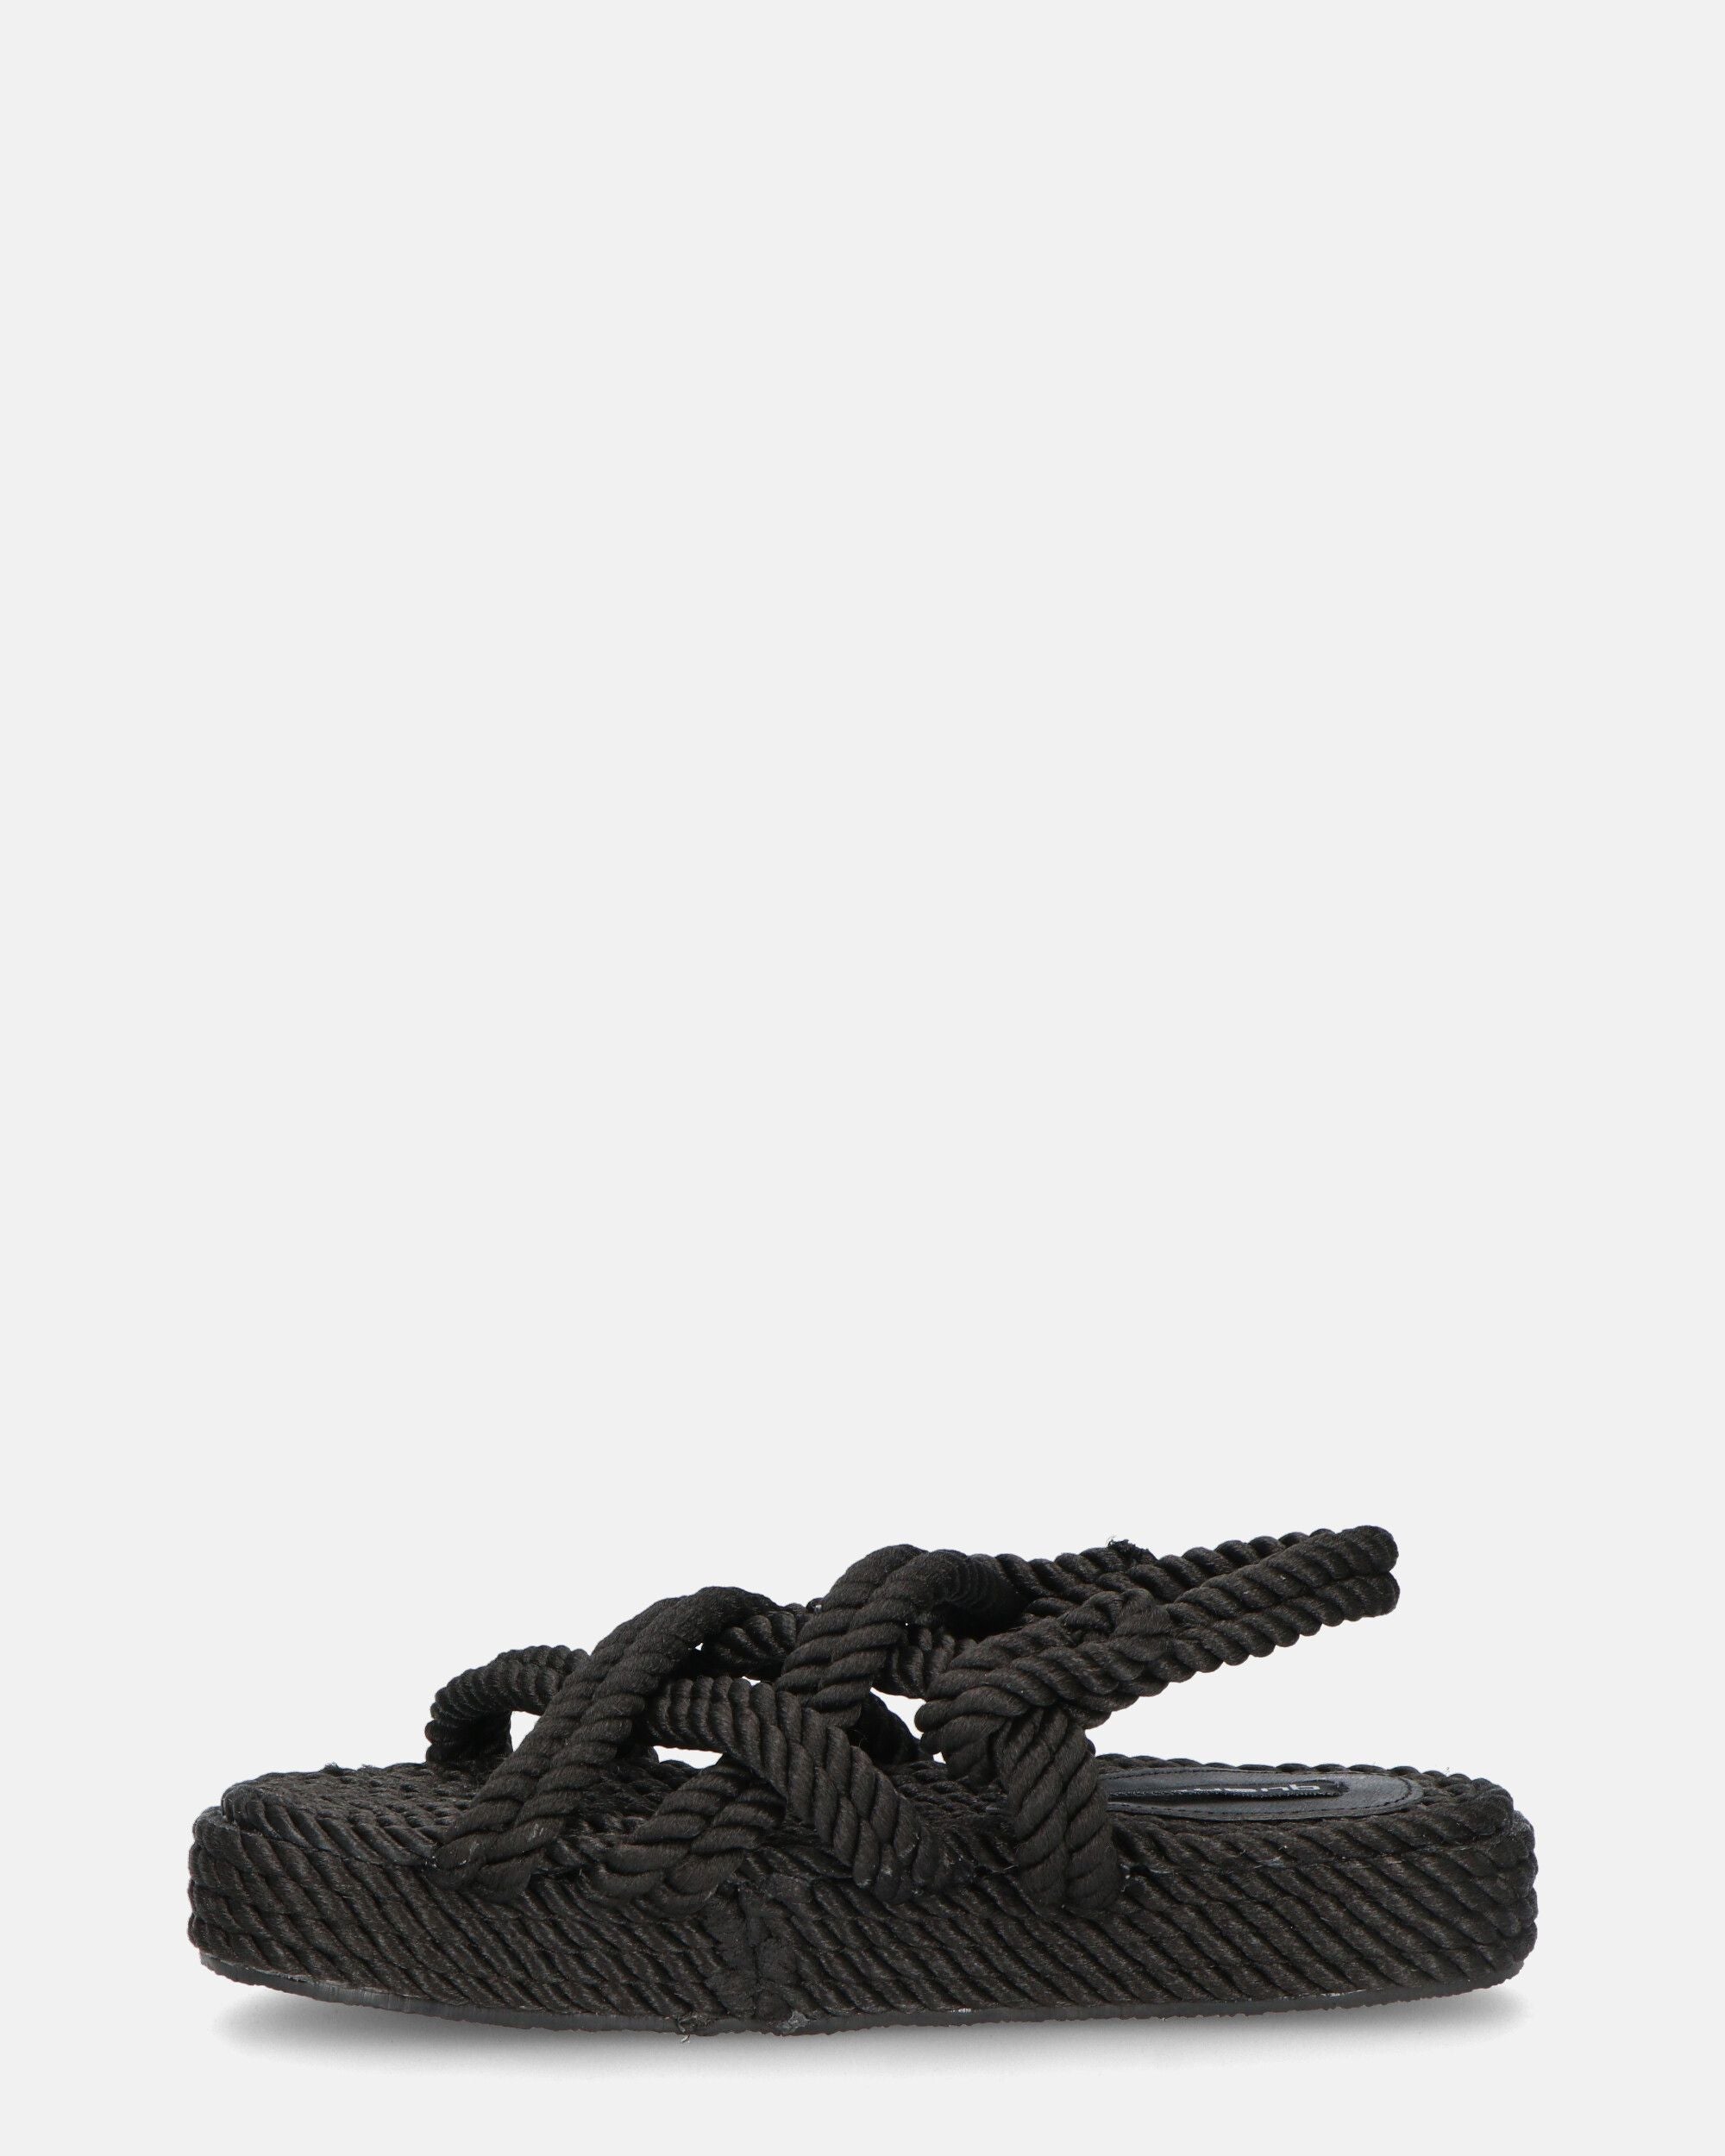 MARIYA - sandalias negras de cuerda trenzada